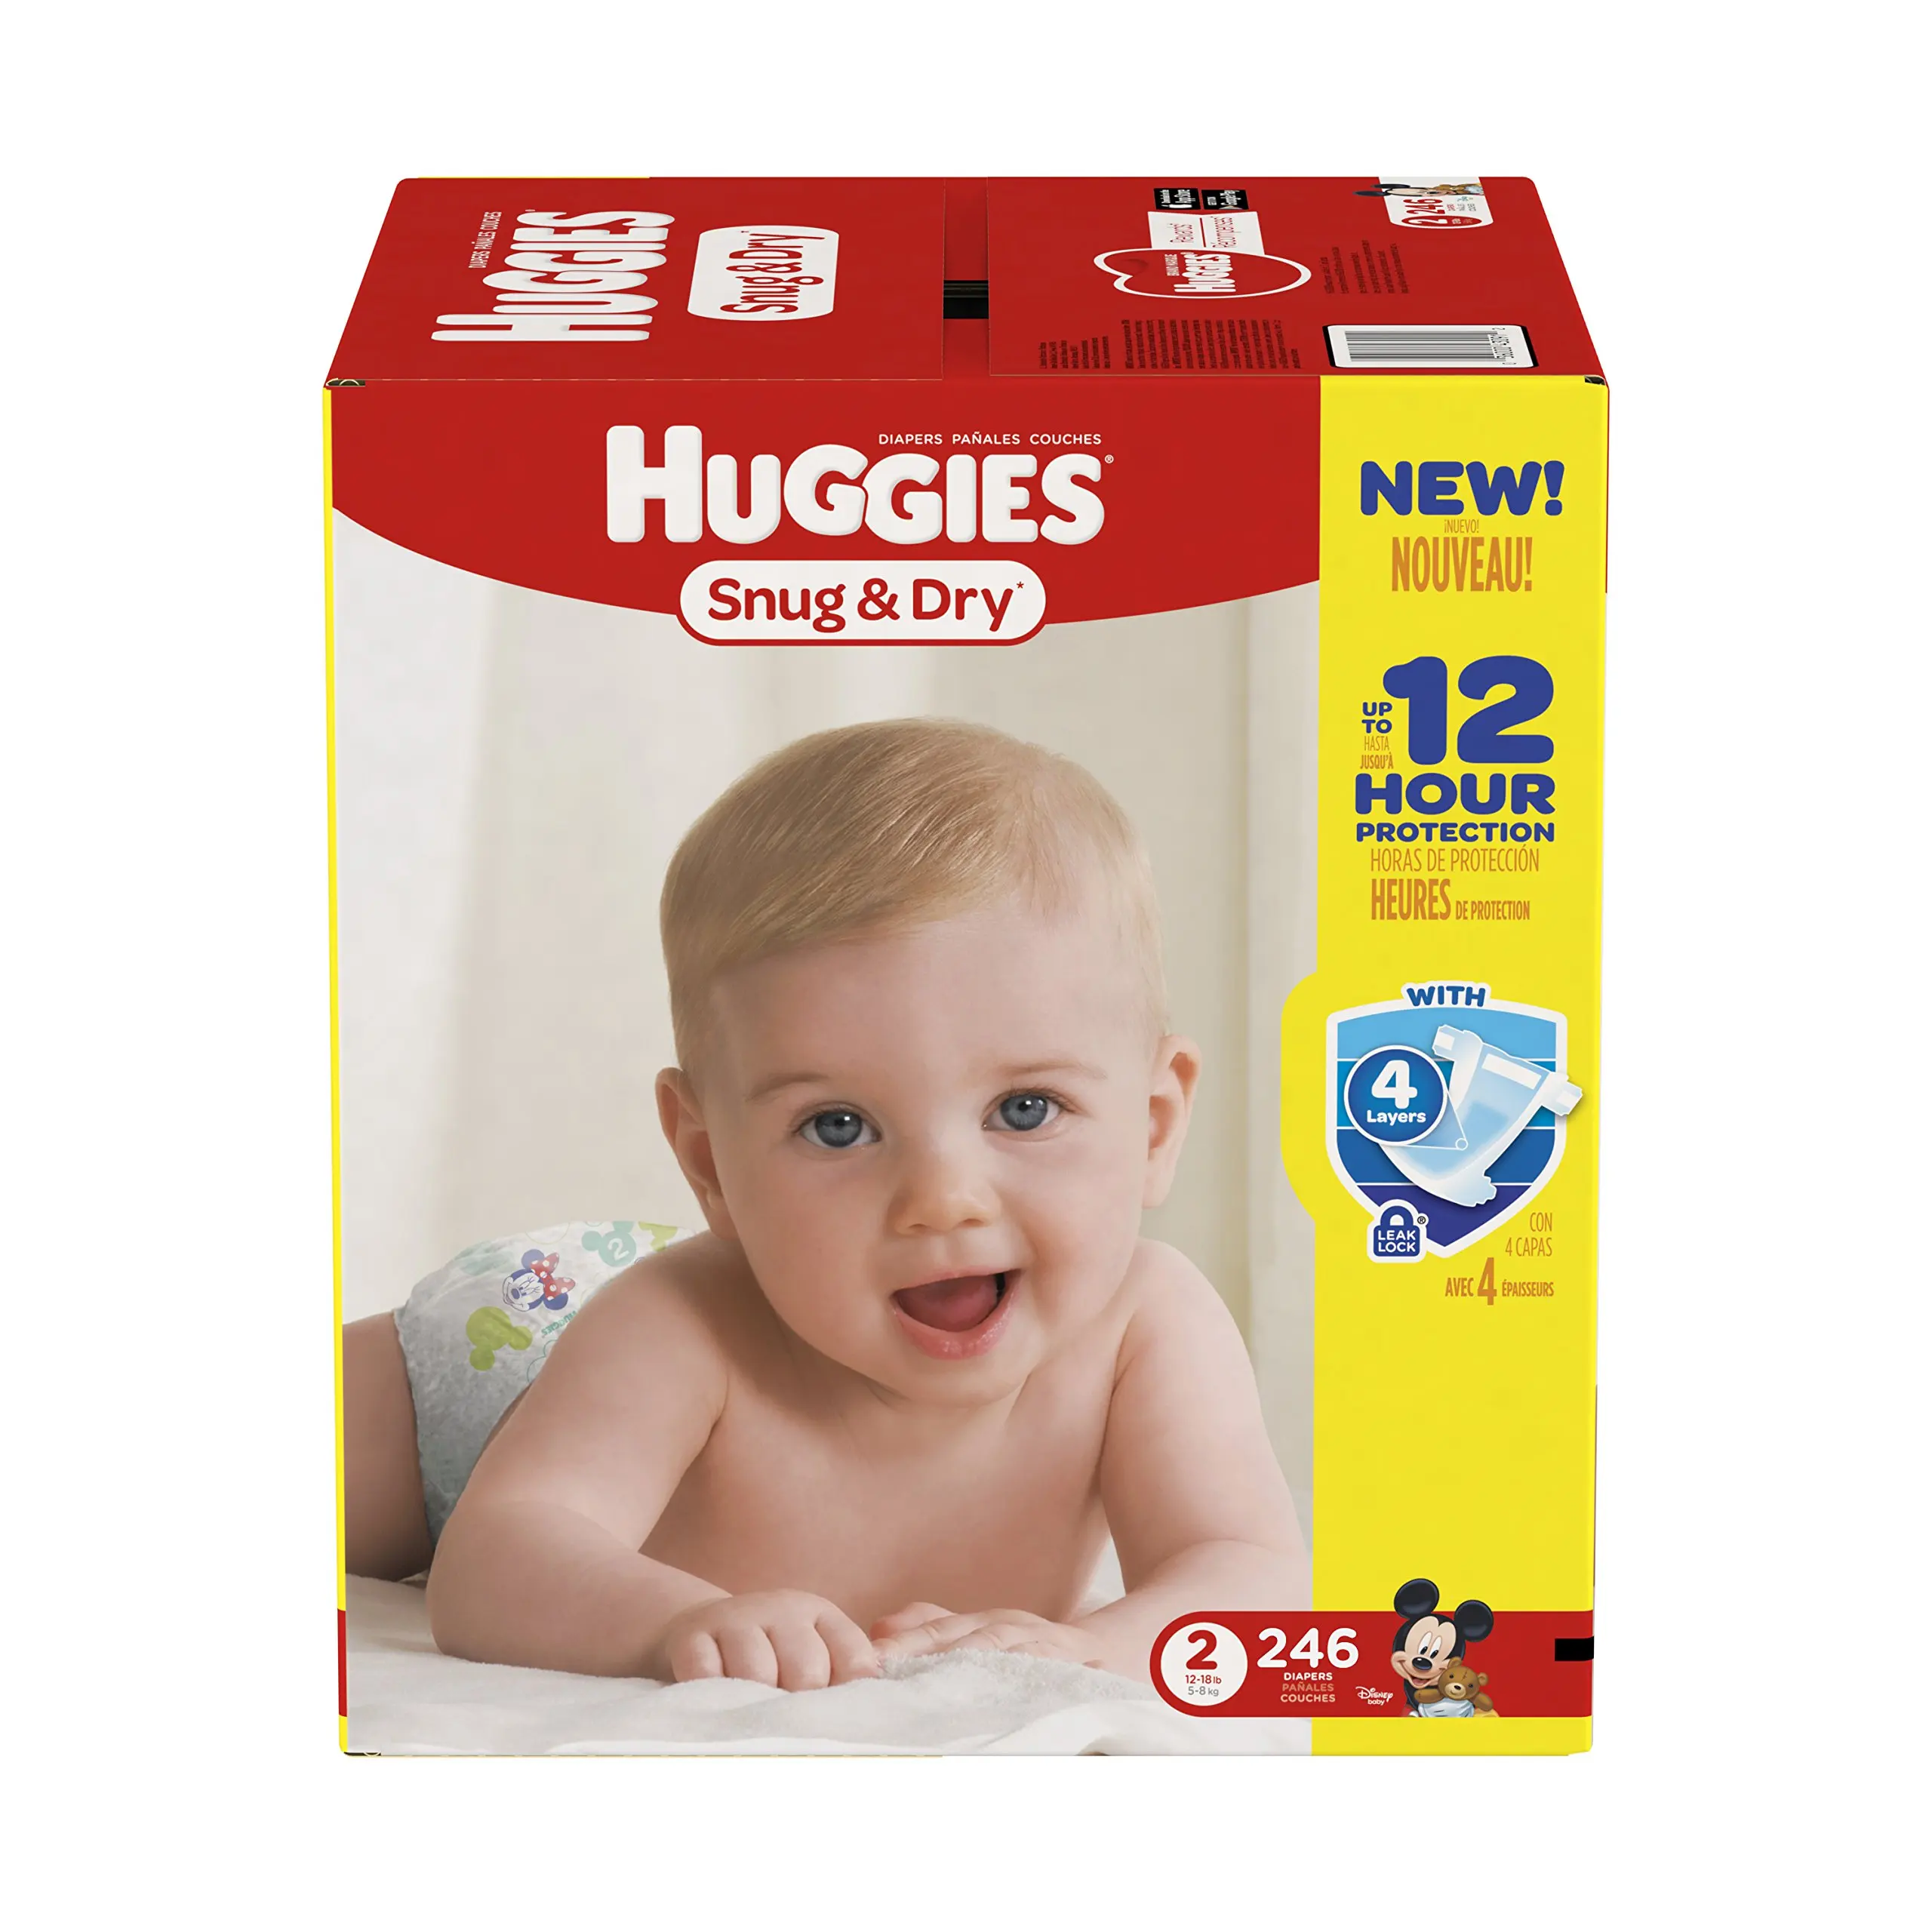 huggies snug & dry diapers size 4